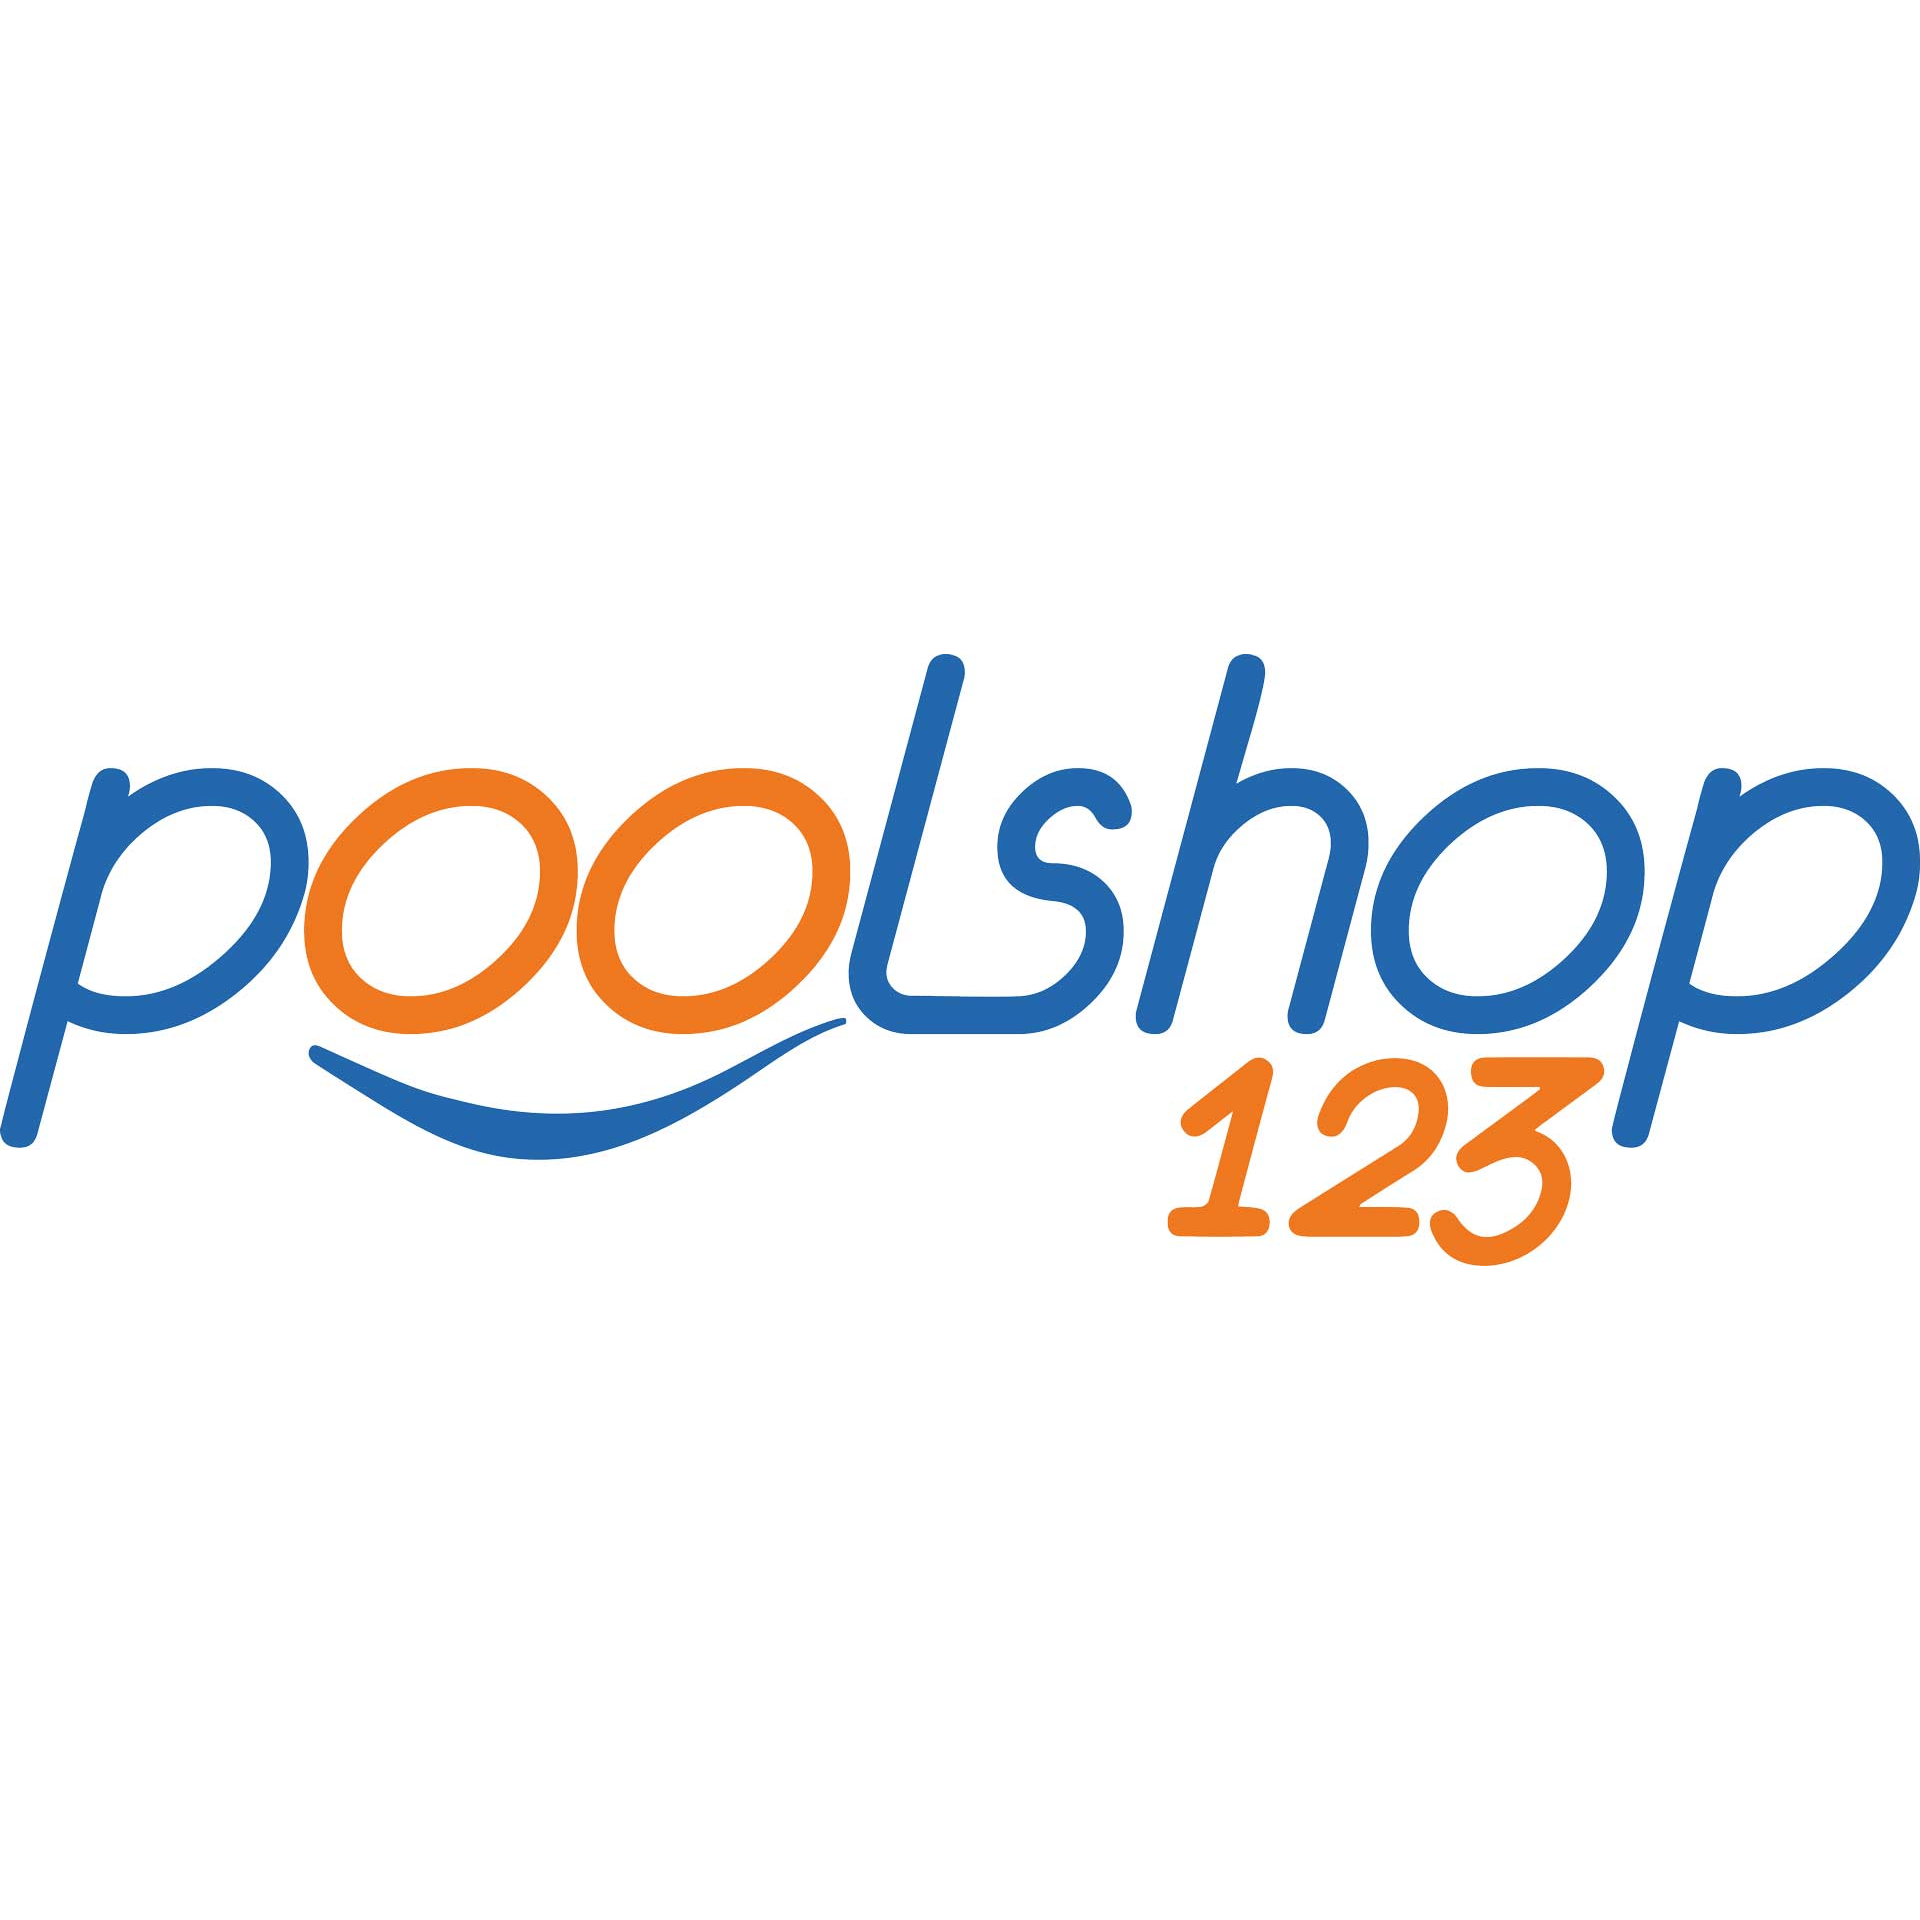 Poolshop123 GmbH in Lübeck - Logo